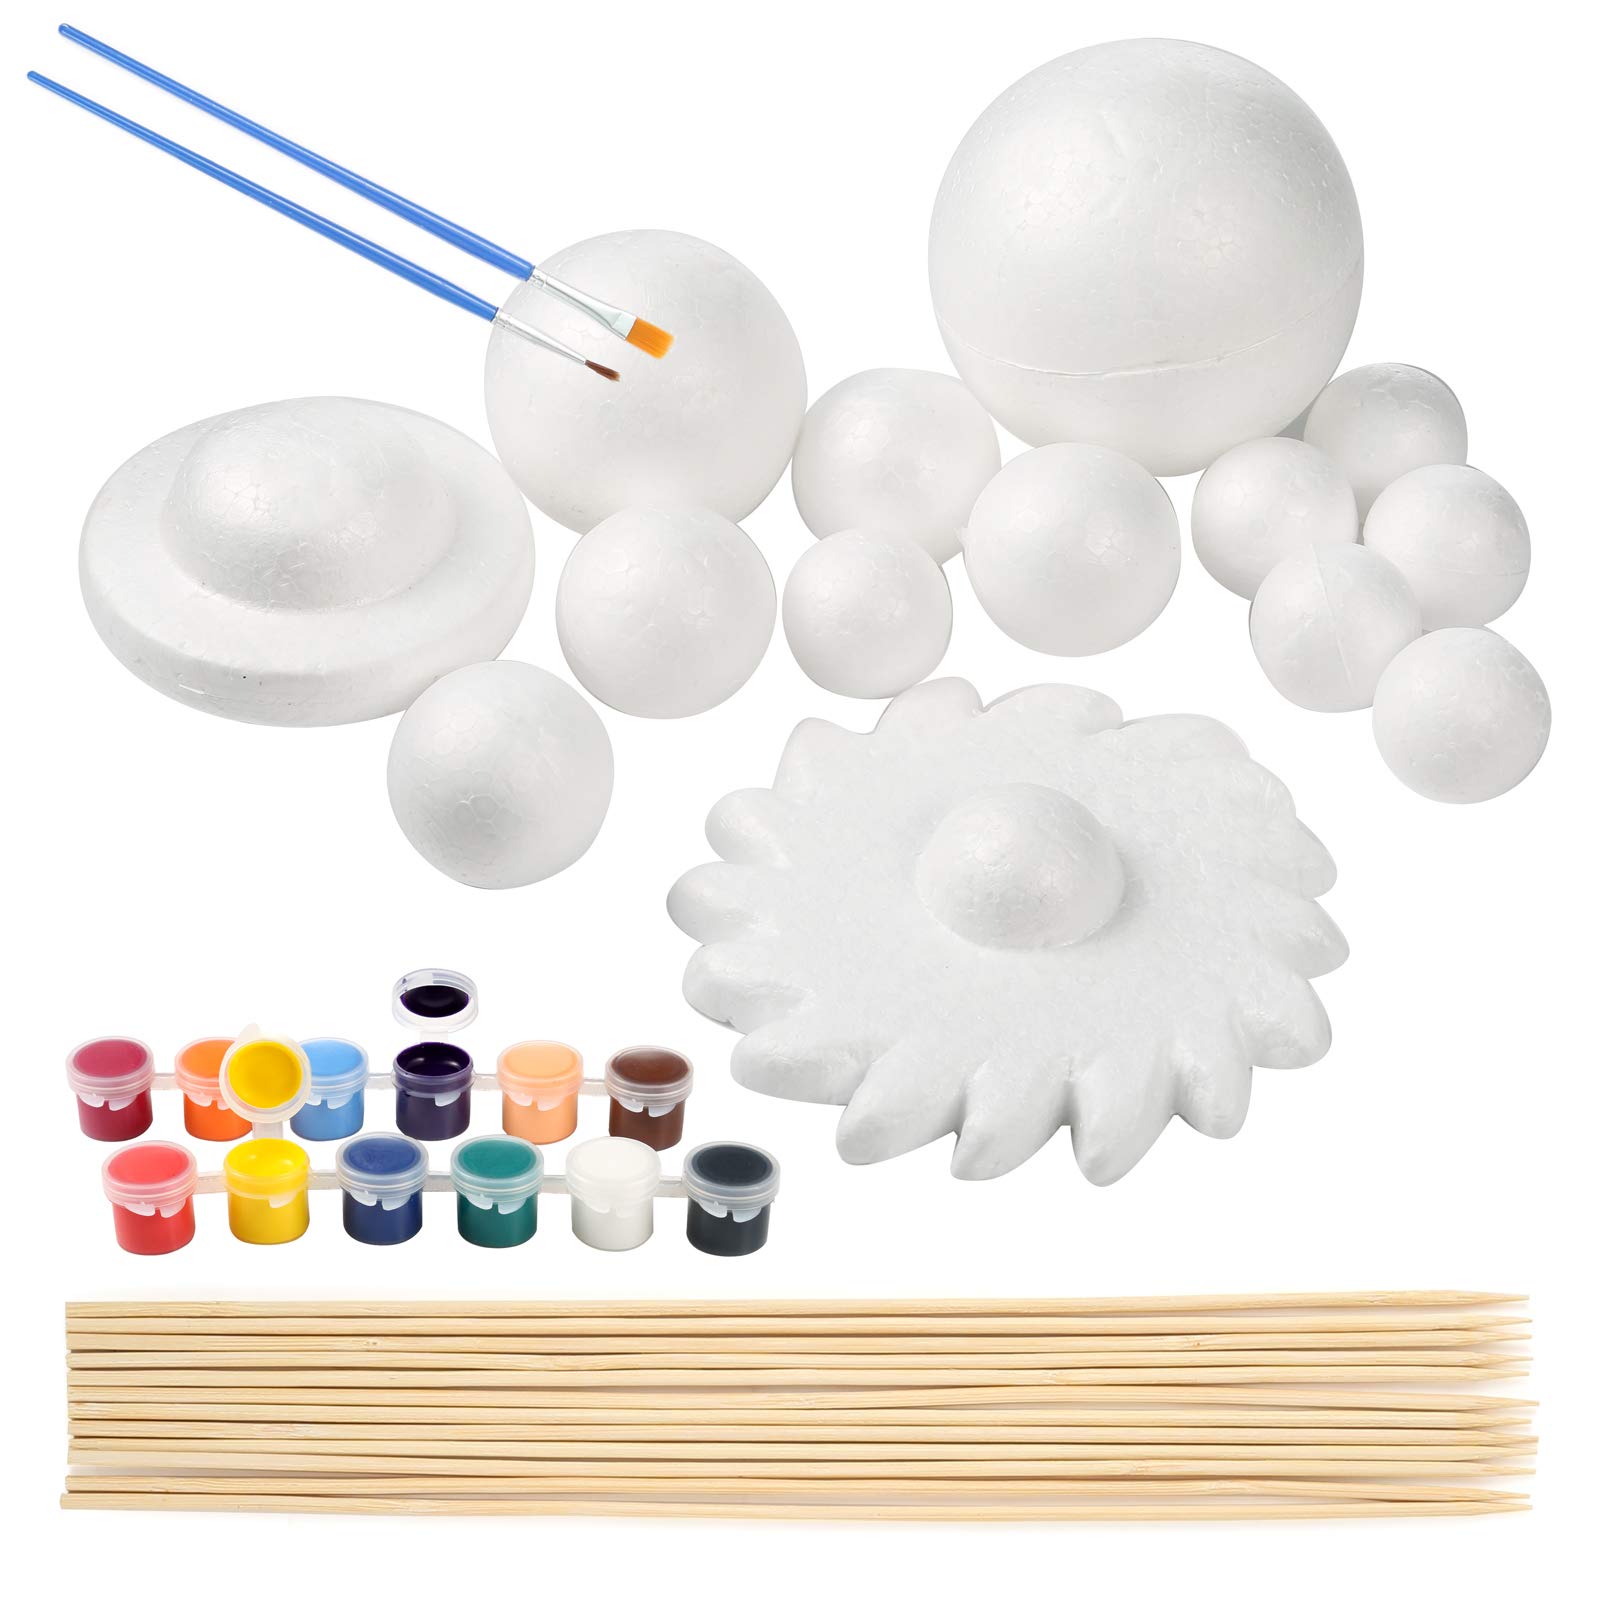 Pllieay Solar System Model Foam Ball Kit Includes 14PCS Mixed Sized Polystyrene Spheres Balls, 12PCS Bamboo Sticks, 12 Color Pig